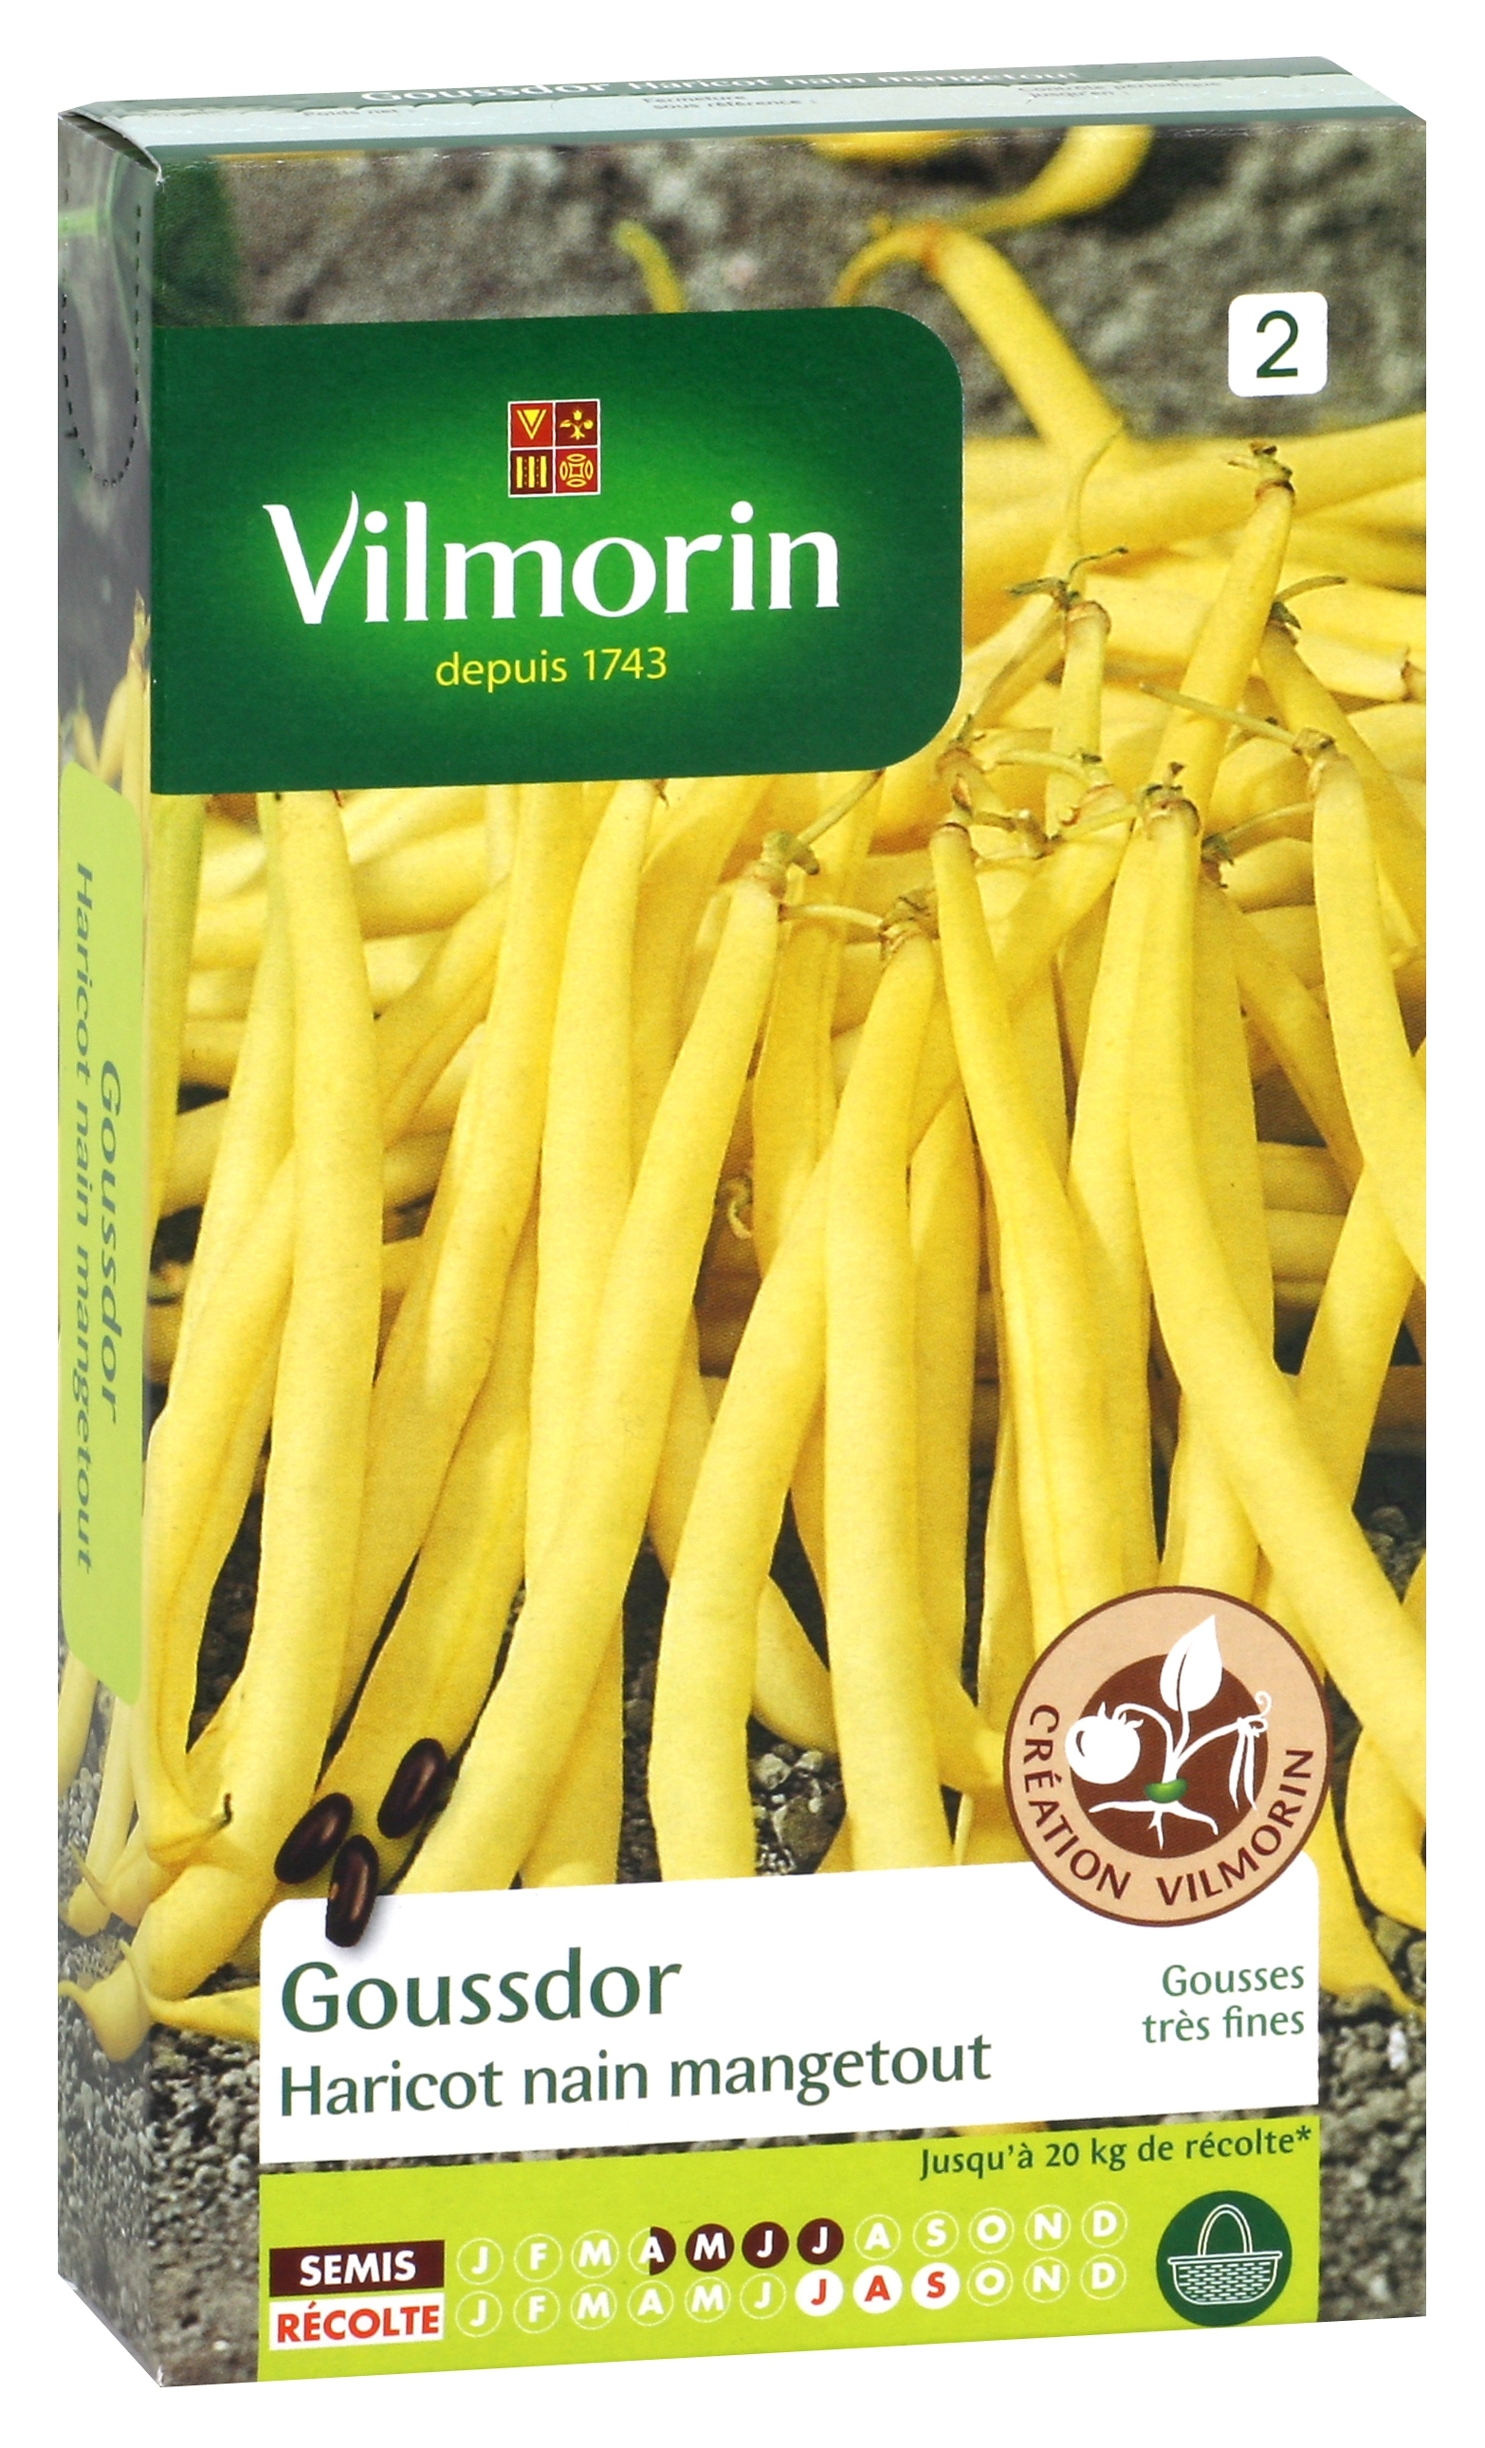 Haricot nain mangetout beurre Goussdor (Création Vilmorin) - Vilmorin